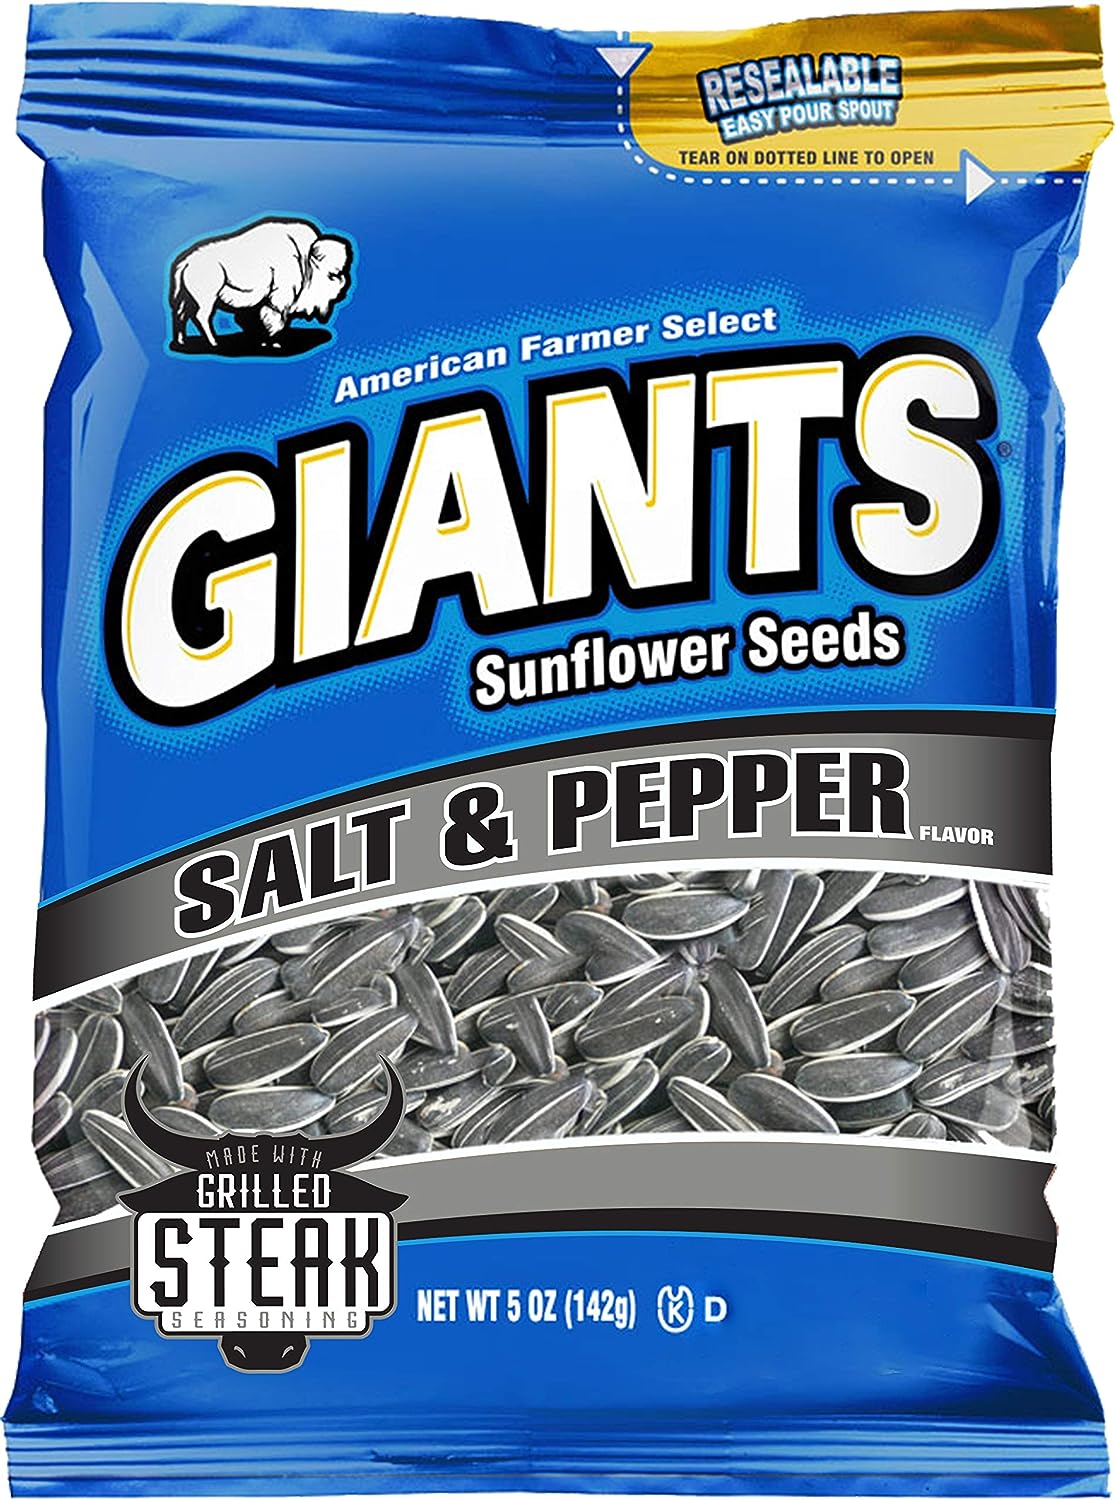 Salt & Pepper Flavored GIANTS Sunflower Seeds(bag,12 counts)